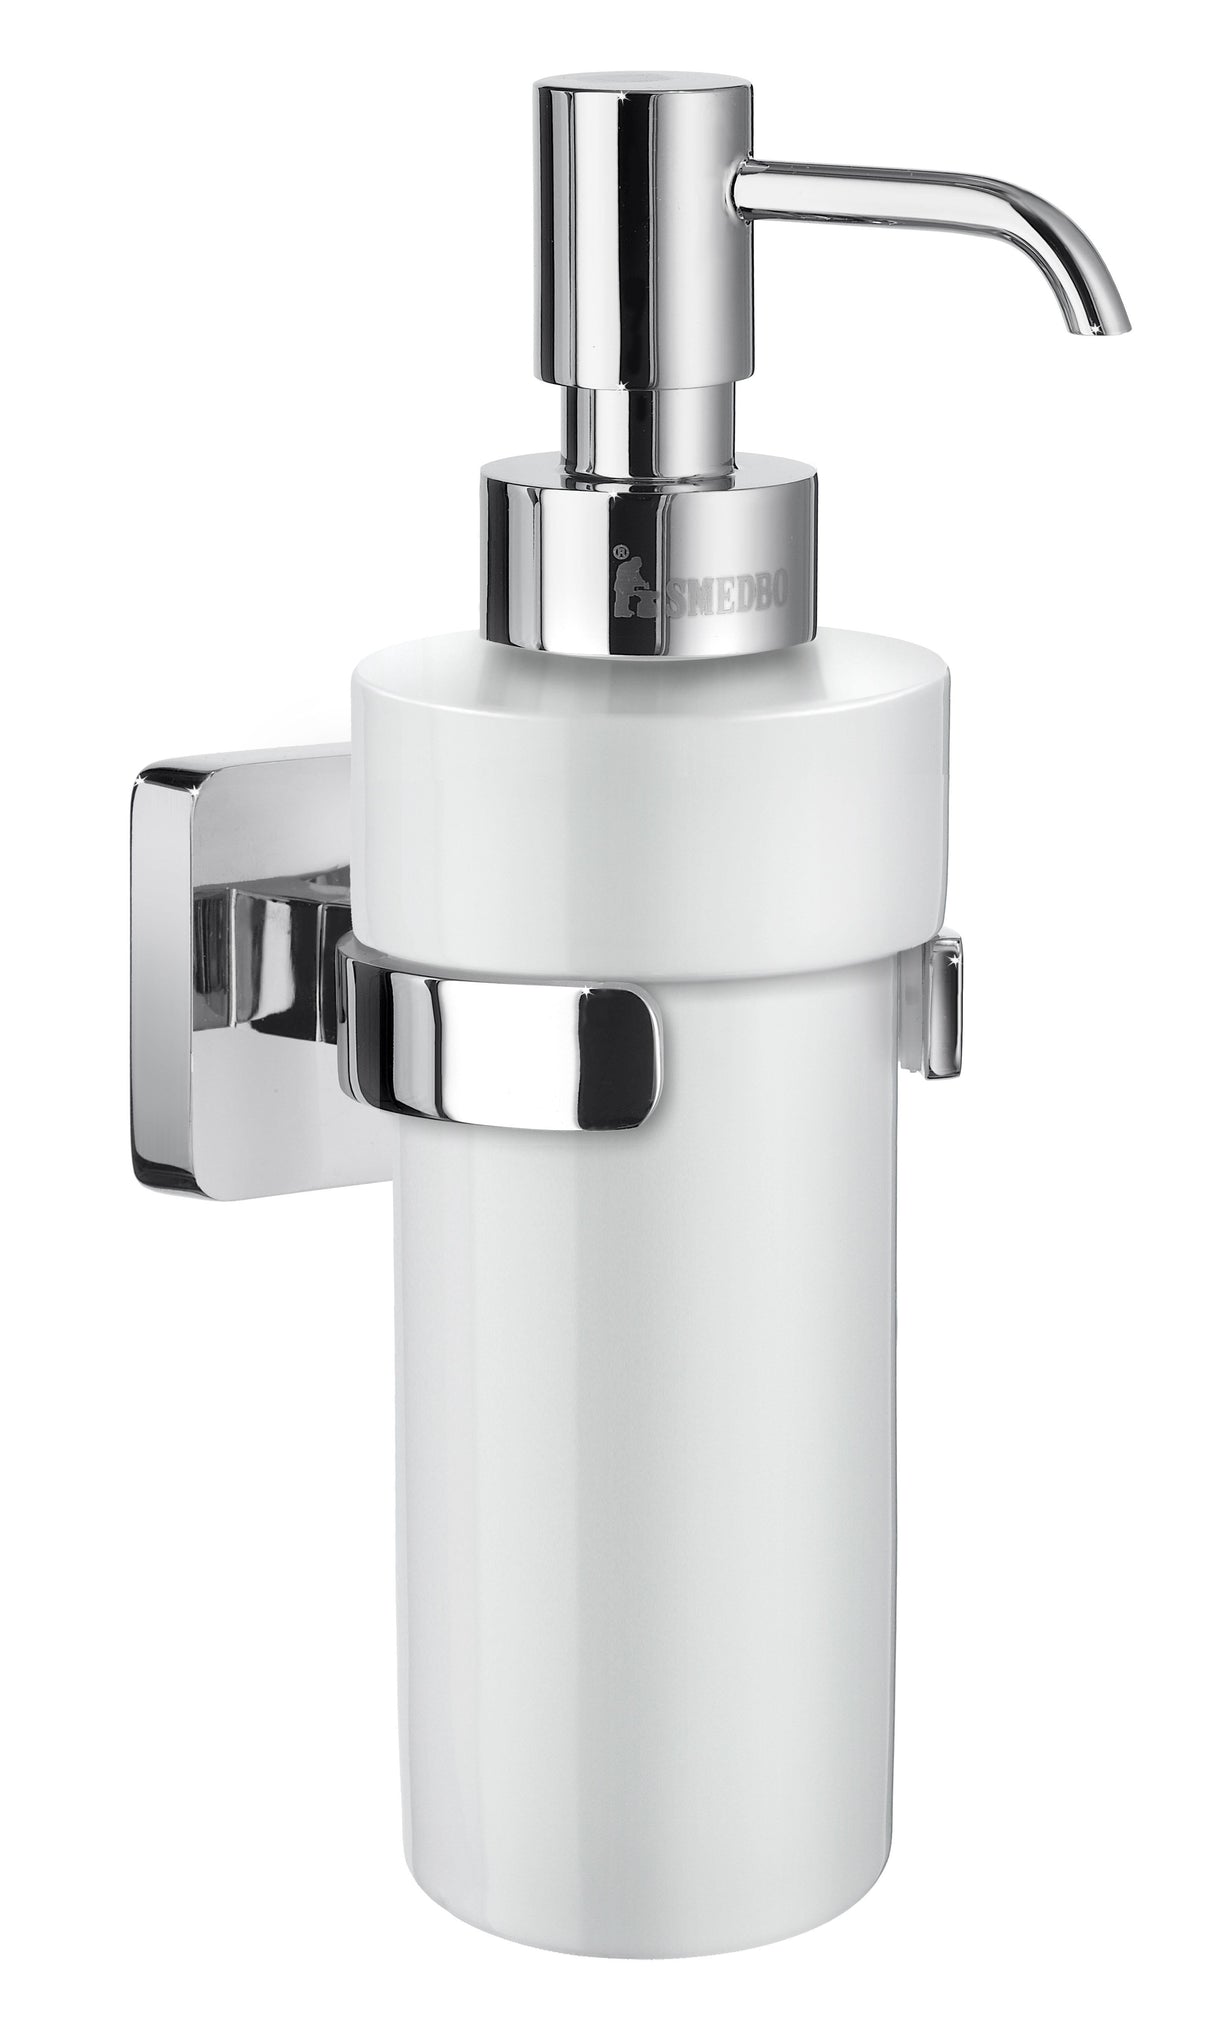 Smedbo Ice- Holder with Porcelain Soap Dispenser in Polished Chrome